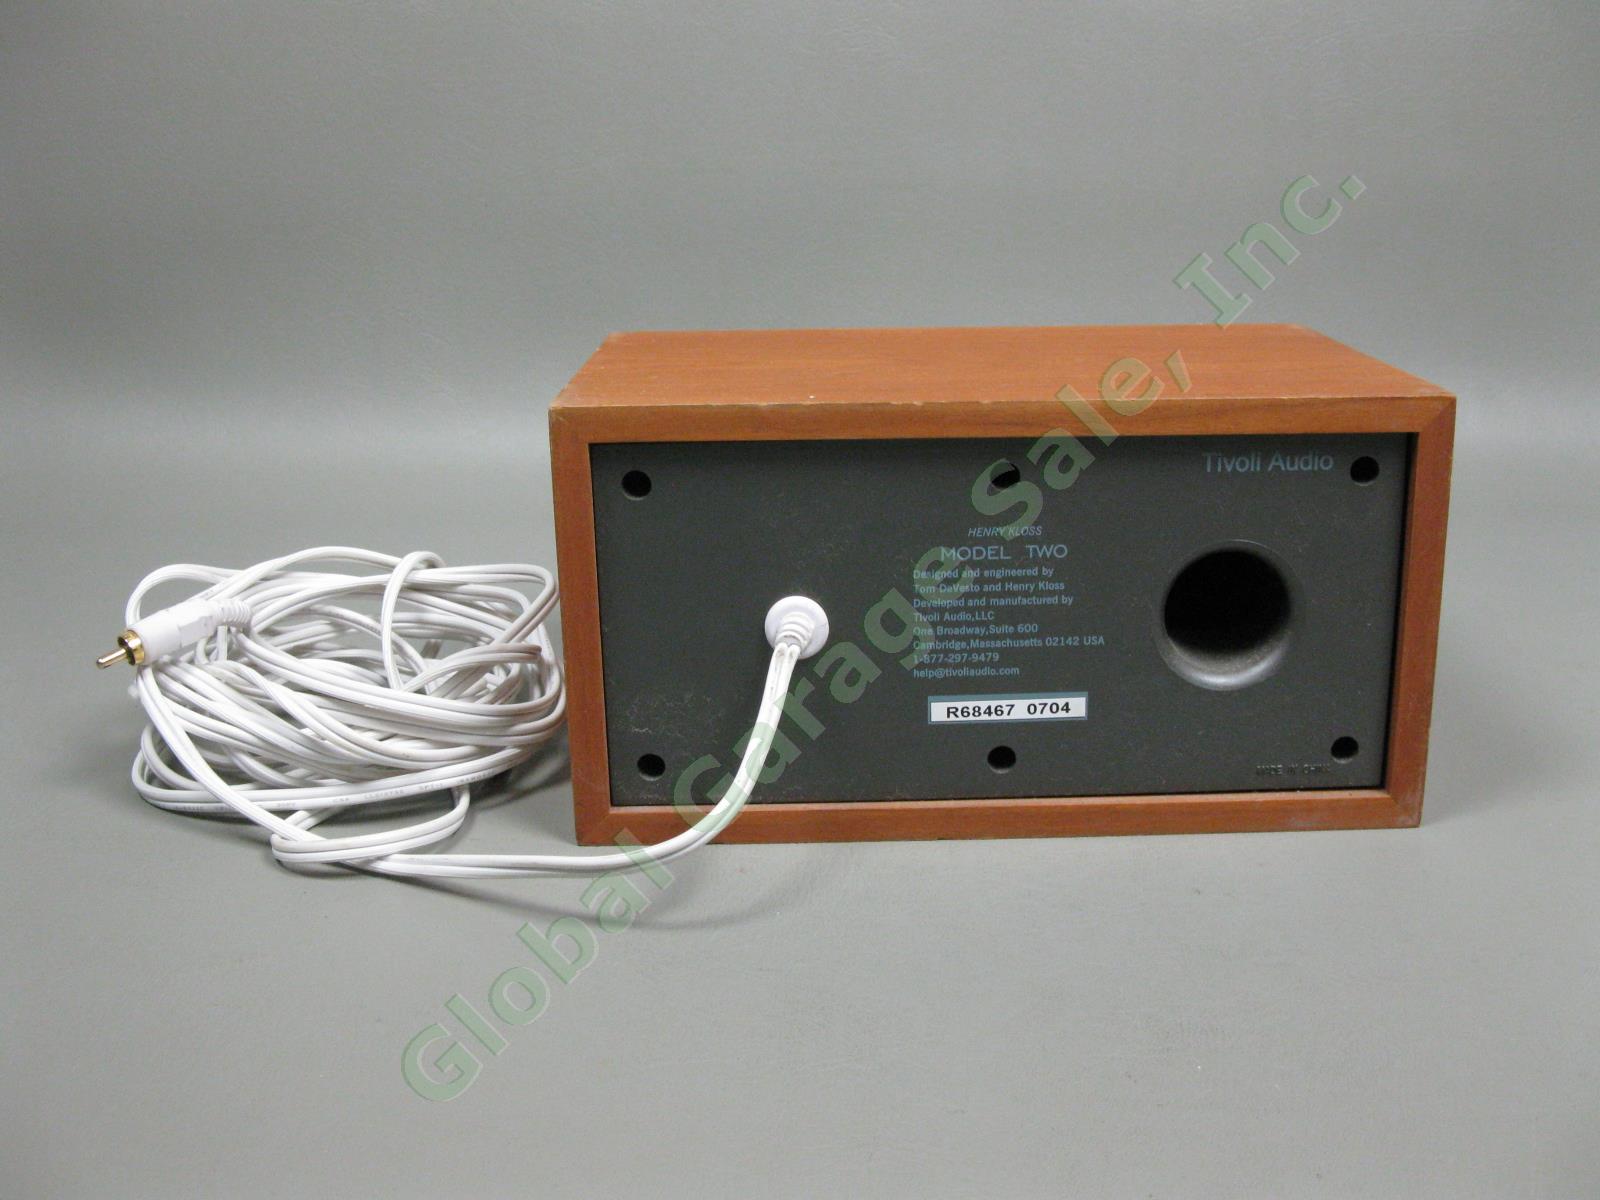 Tivoli Audio Model Two Henry Kloss AM/FM Radio Subwoofer Speakers Tested IWC NR 6